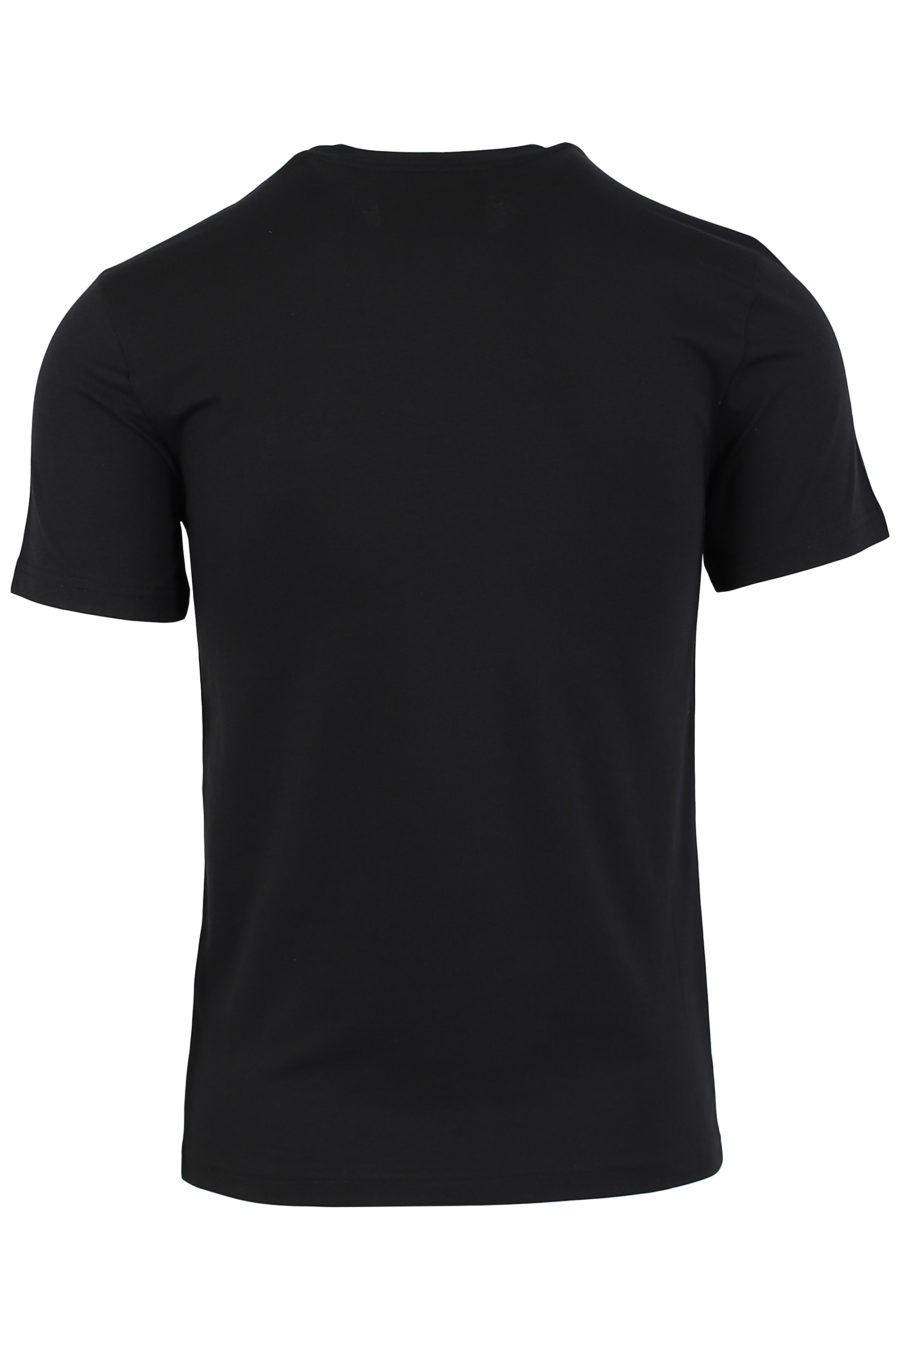 Camiseta negra logo en color oro - IMG 0937